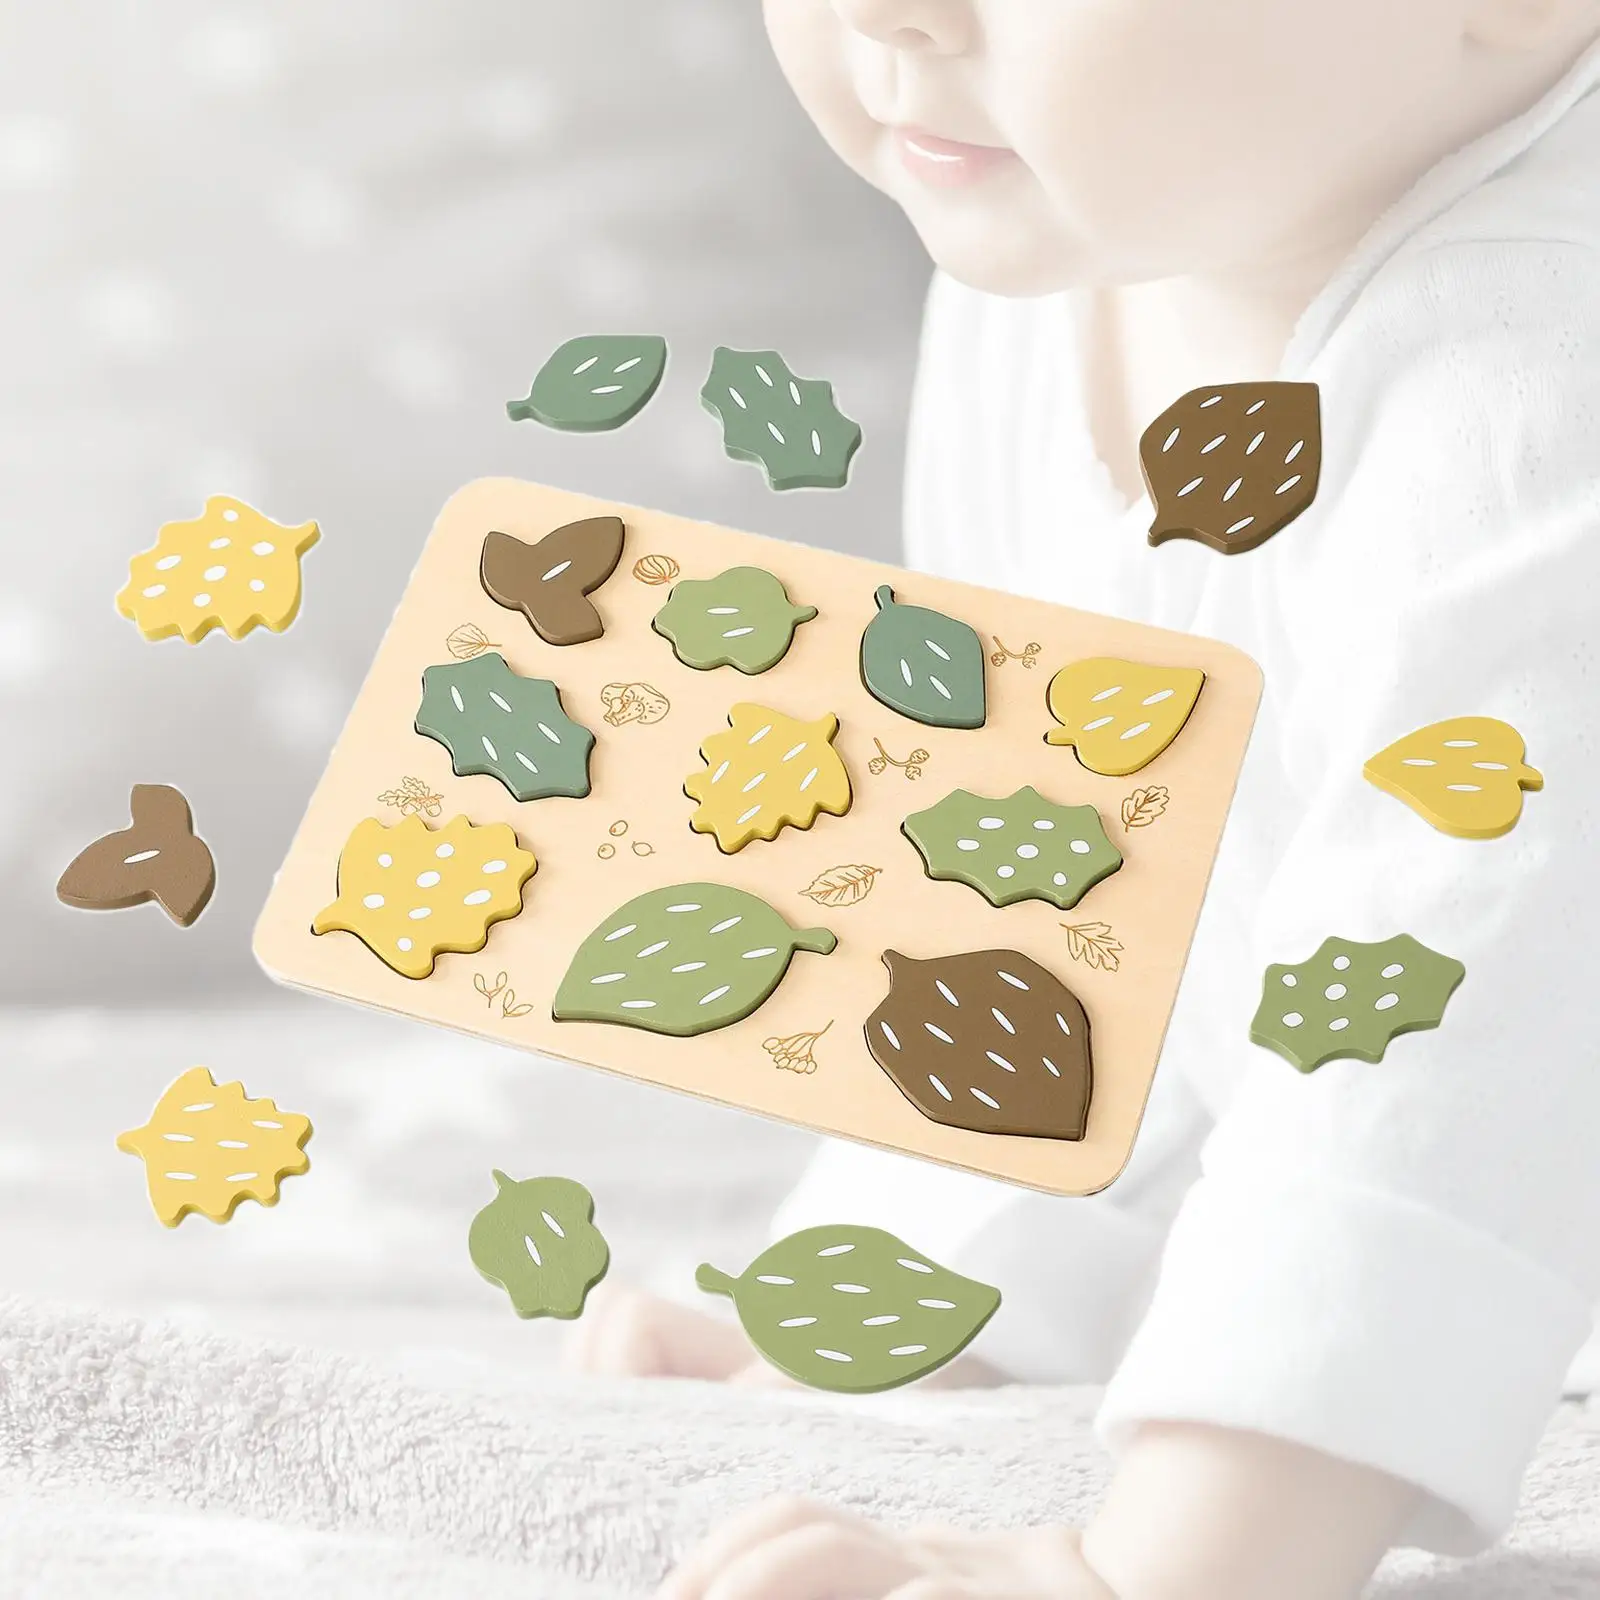 Leaf Jigsaw Puzzles Hand Eye Coordination Montessori Educational for Boys